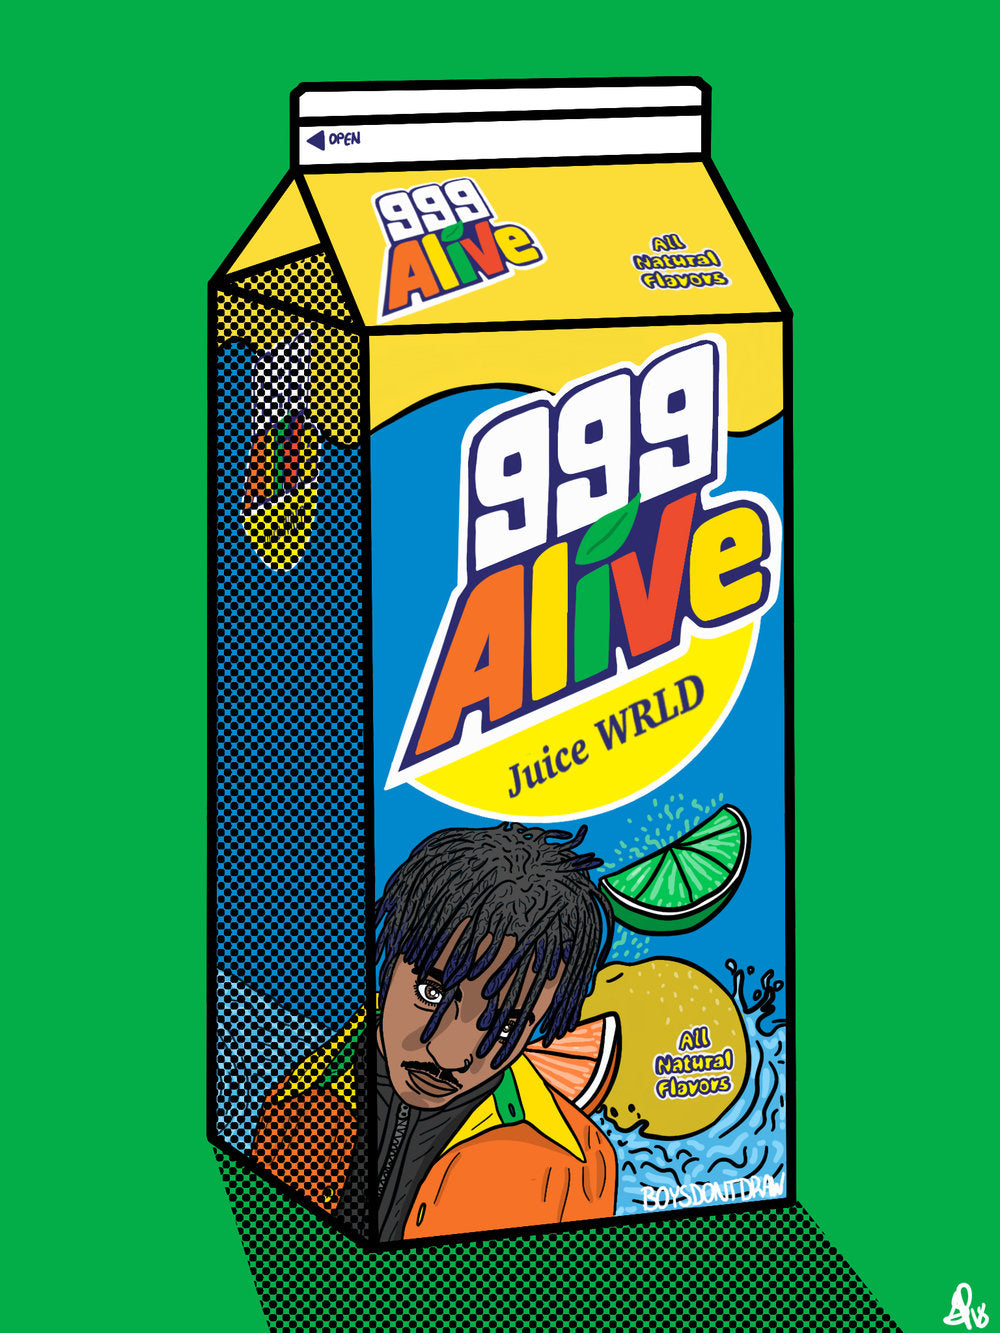 999 ALIVE - Limited Poster - BOYSDONTDRAW